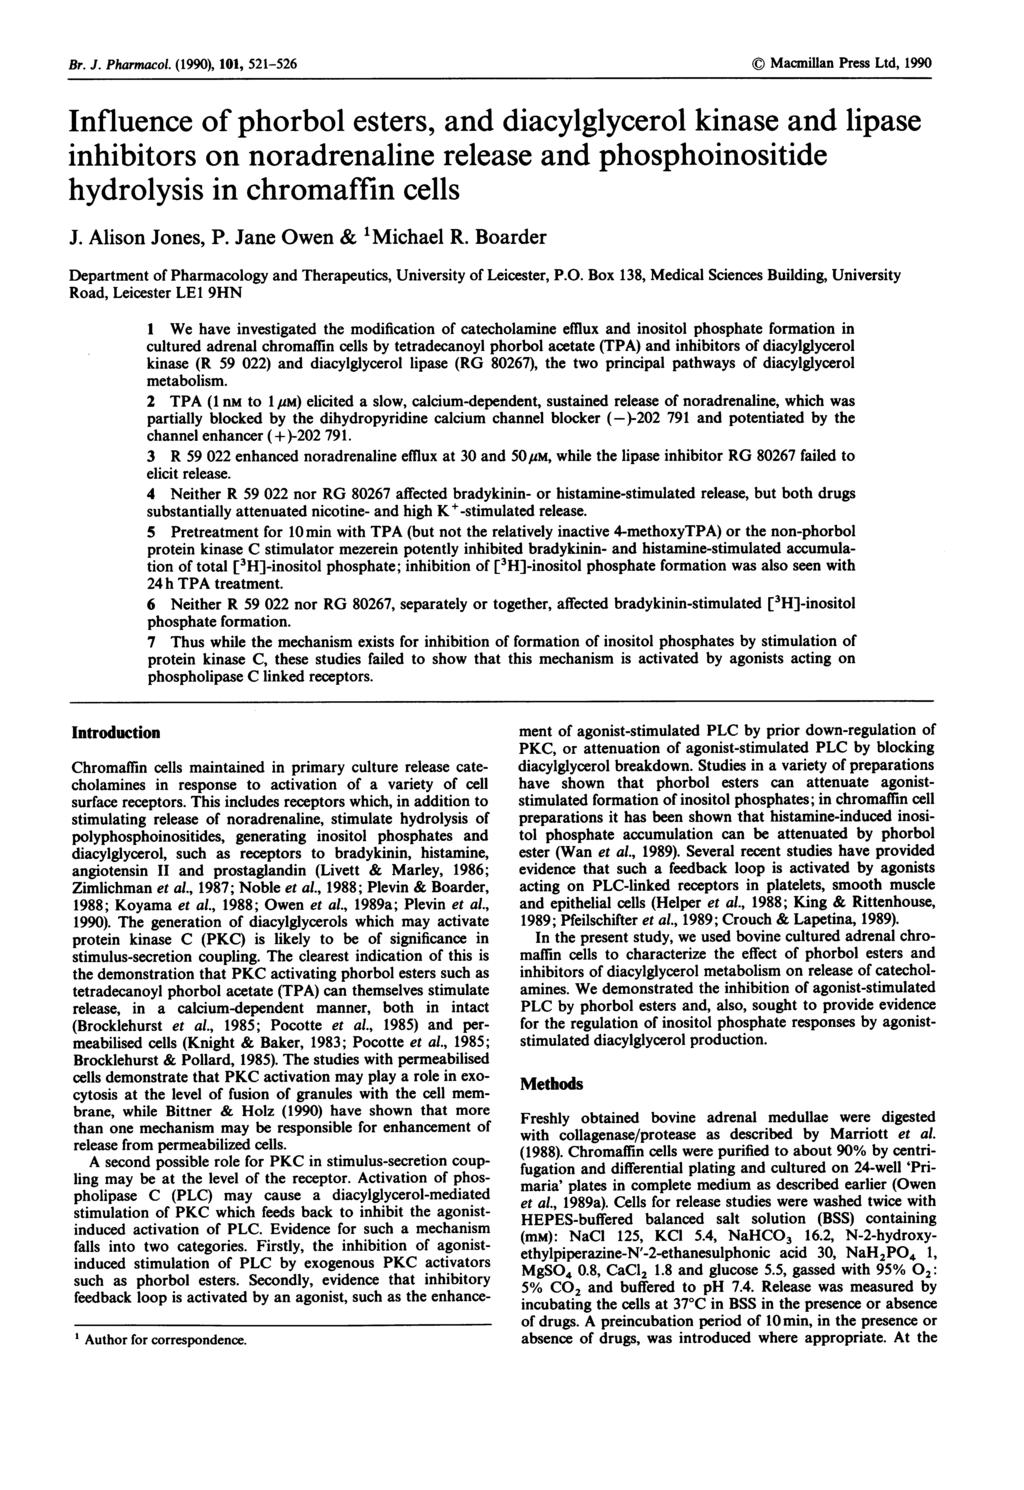 Br. J. Pharmaol. (199), 11, 521-526 Influene of phorbol esters, and diaylglyerol kinase and lipase inhibitors on noradrenaline release and phosphoinositide hydrolysis in hromaffin ells J.